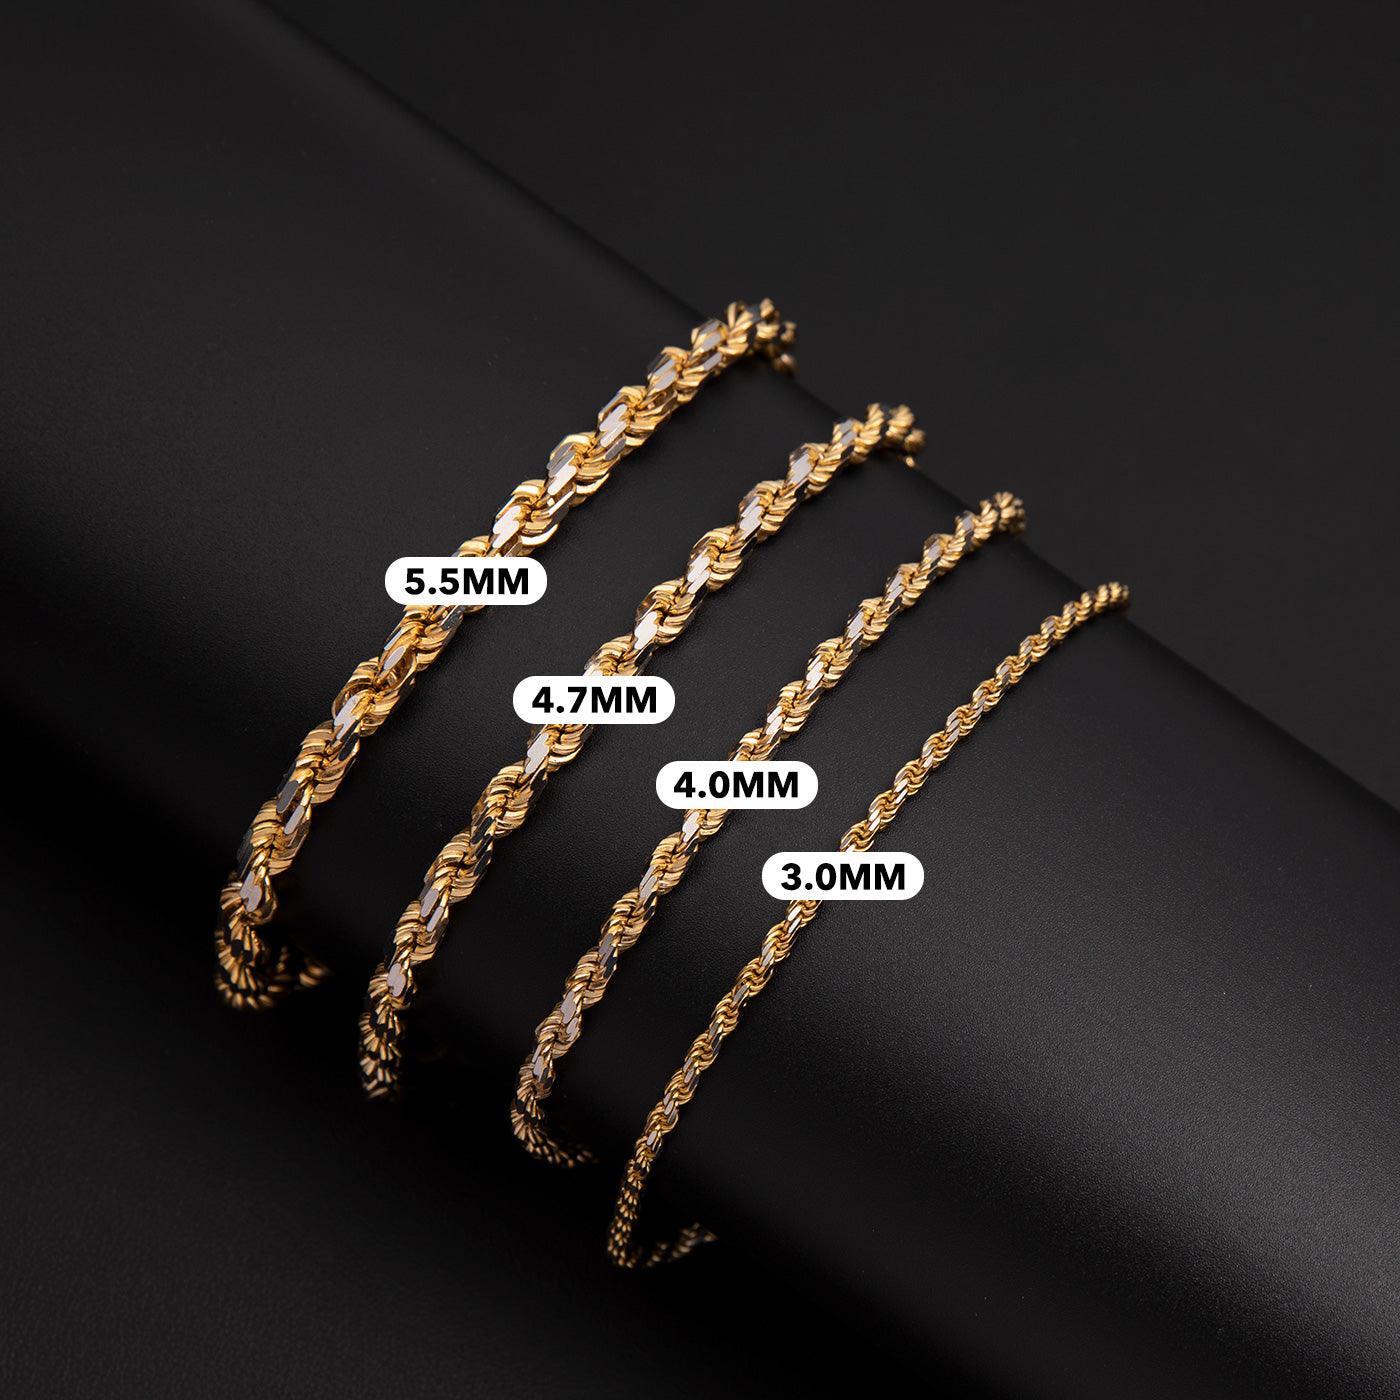 Women's Rope Chain Bracelet 14K Yellow White Gold - Solid - bayamjewelry